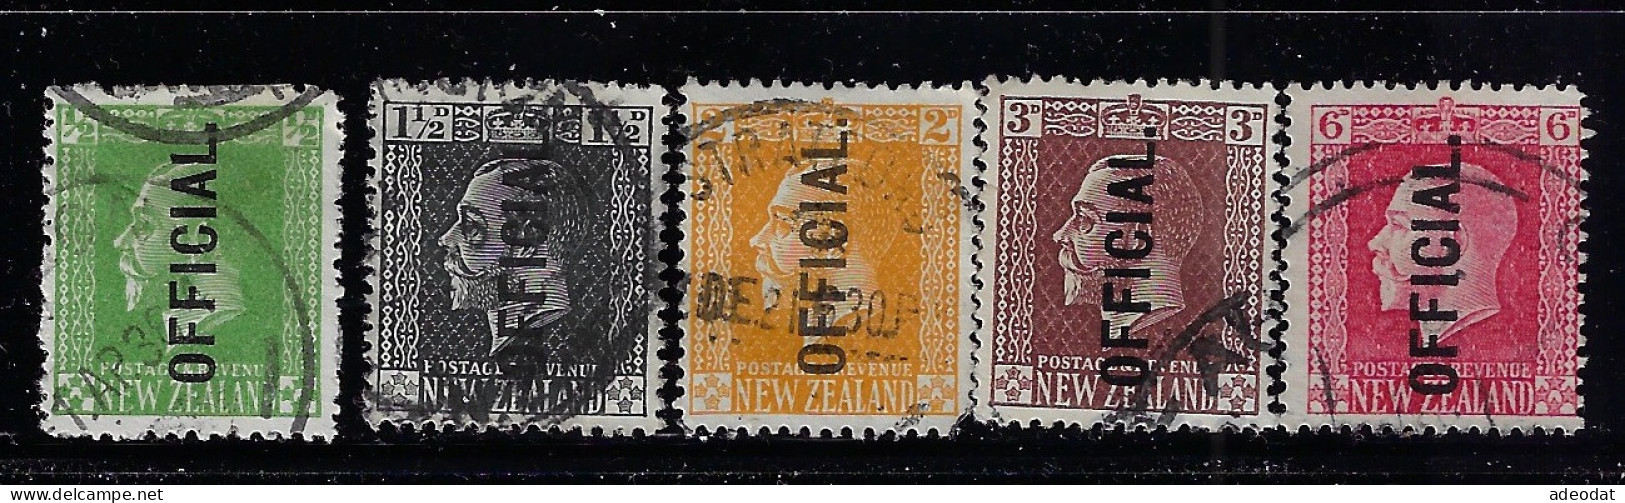 NEW ZEALAND 1915 0FFICIAL STAMPS  SCOTT #O41,O43,O45,O46,O48 USED - Servizio